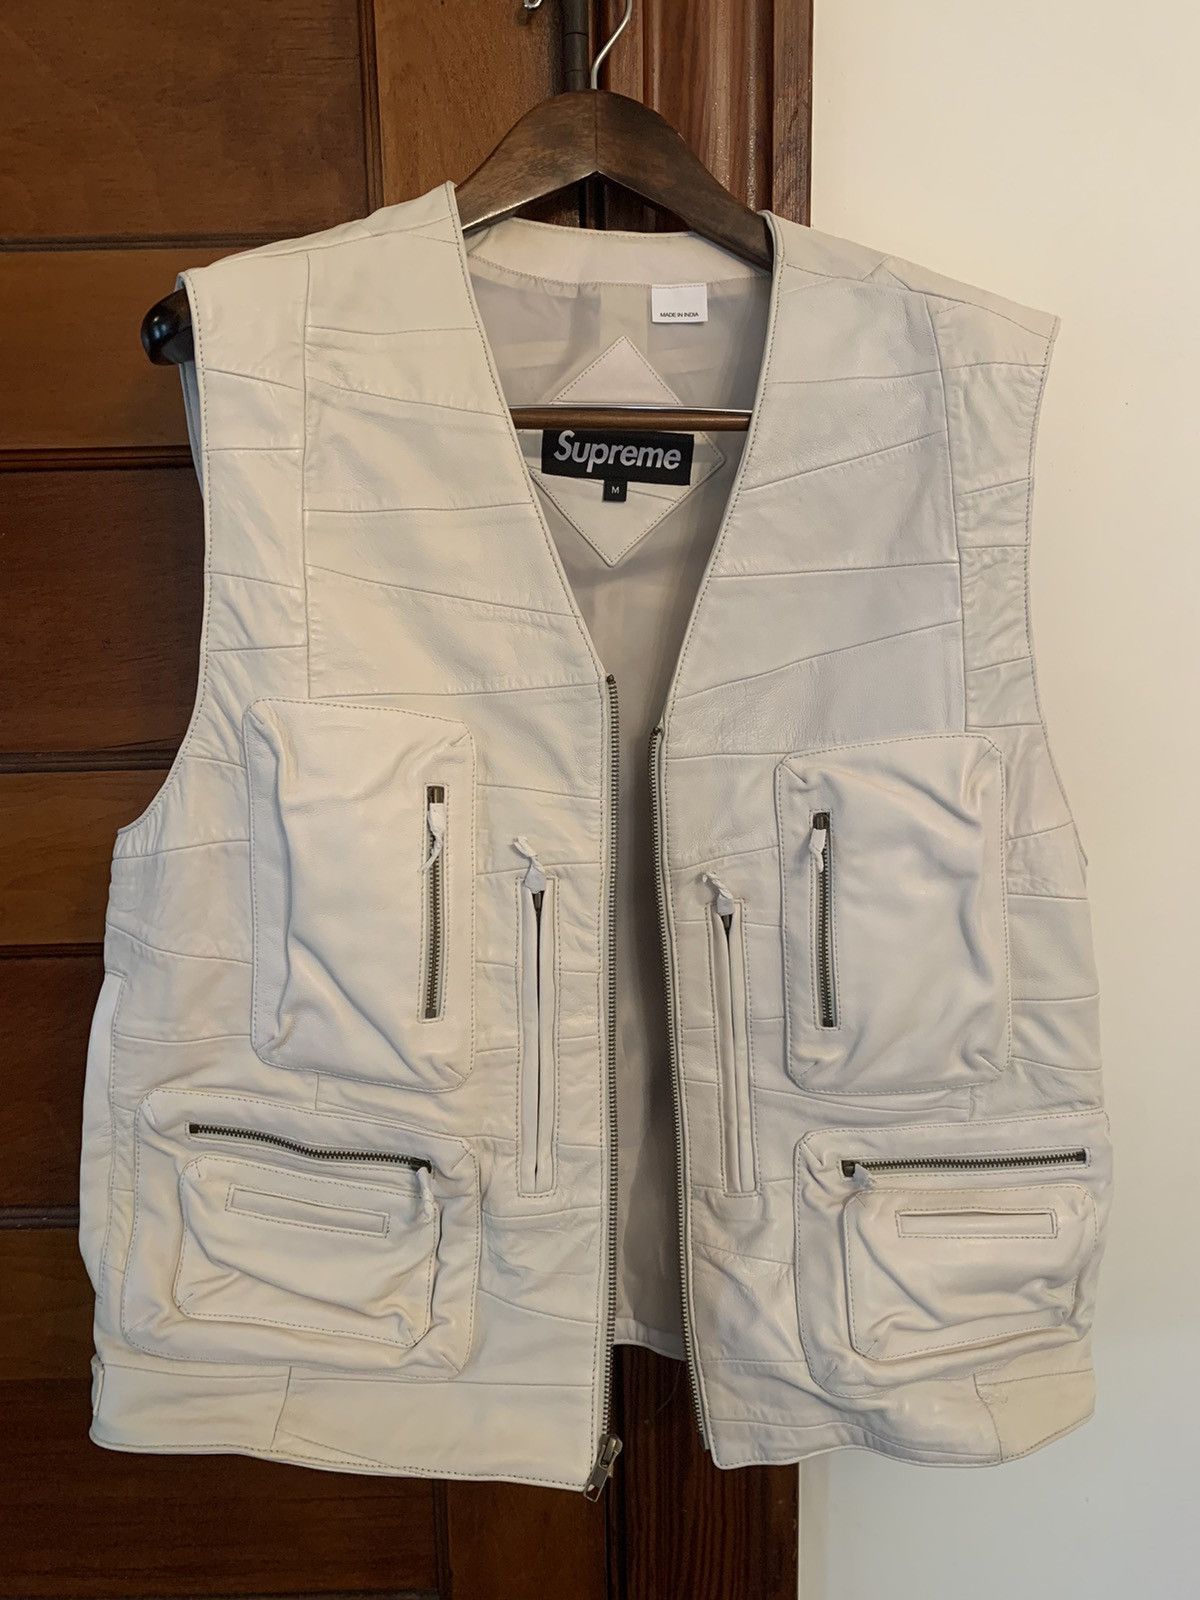 Supreme Supreme Patchwork Leather Cargo Vest | Grailed